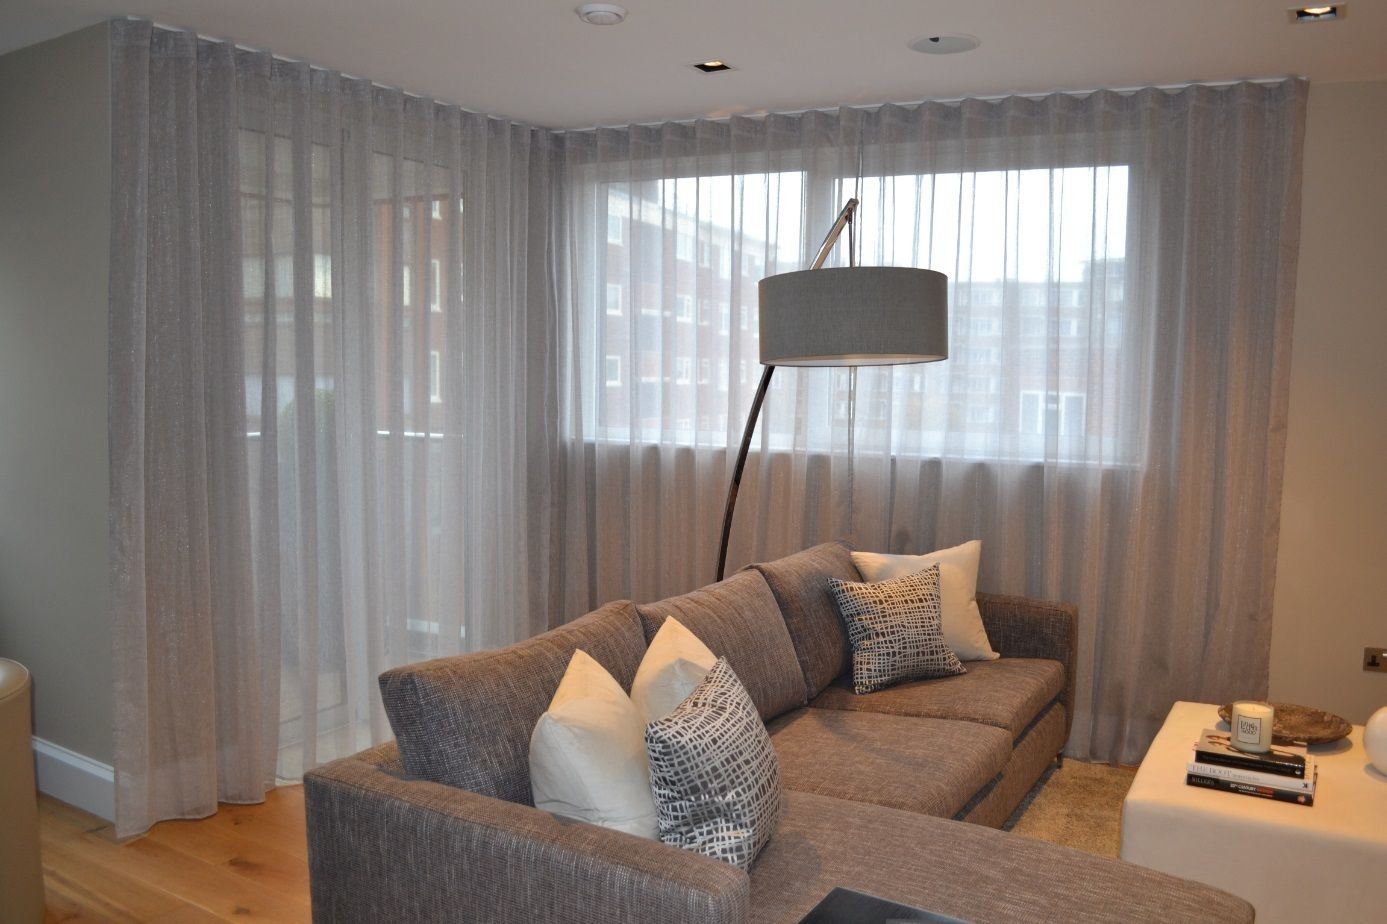 Simplistic Sheer Curtains with Wave Style Pleats International Soft Furnishers Puertas y ventanas modernas Cortinas